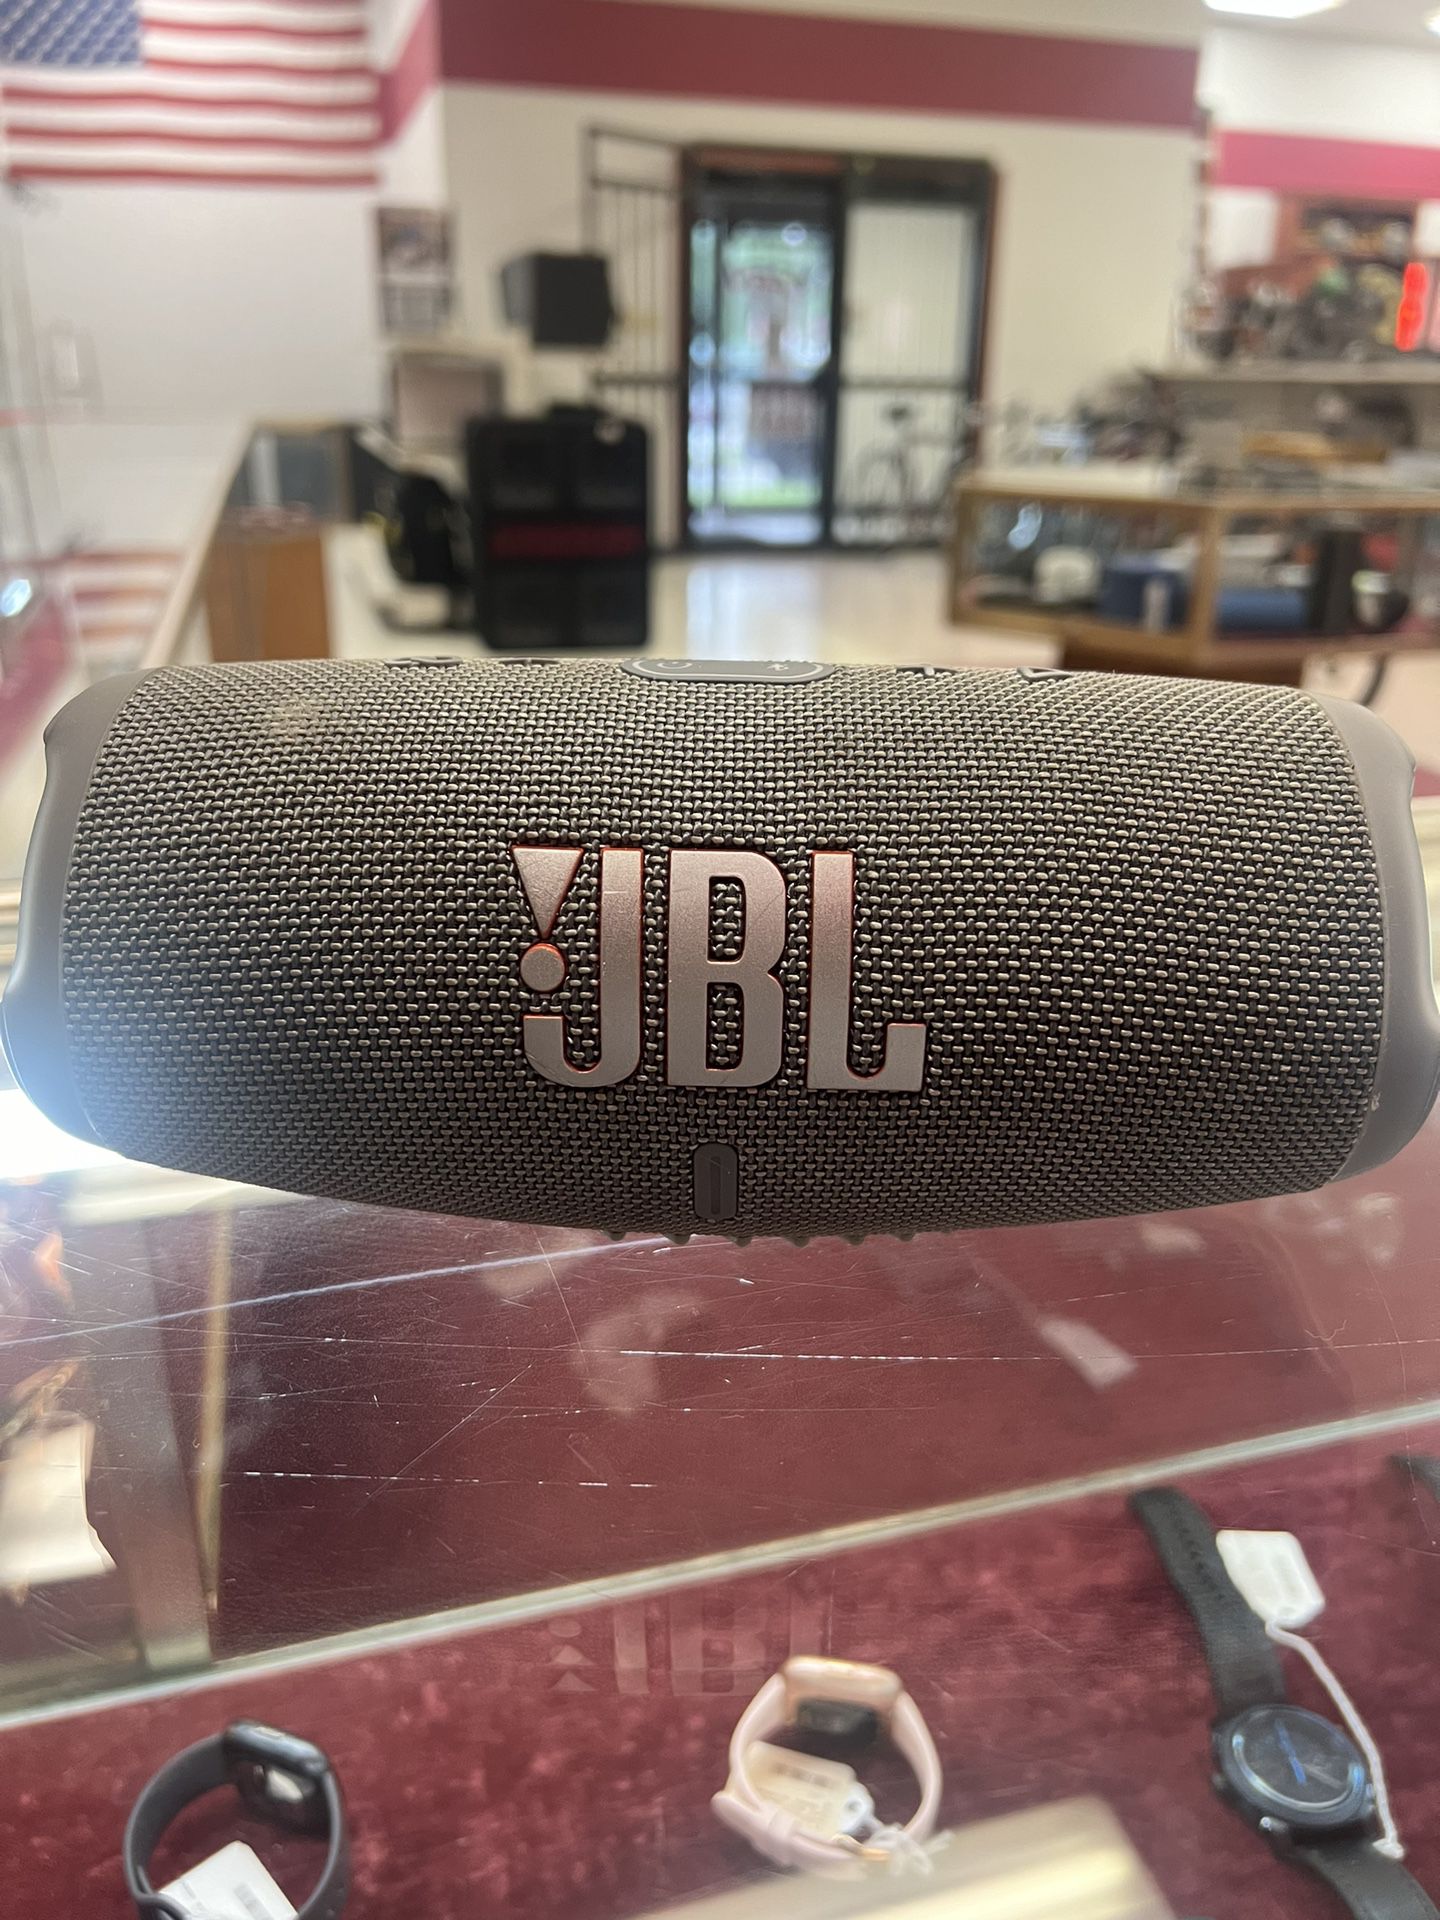 Jbl Charge 5 Bluetooth Speaker 